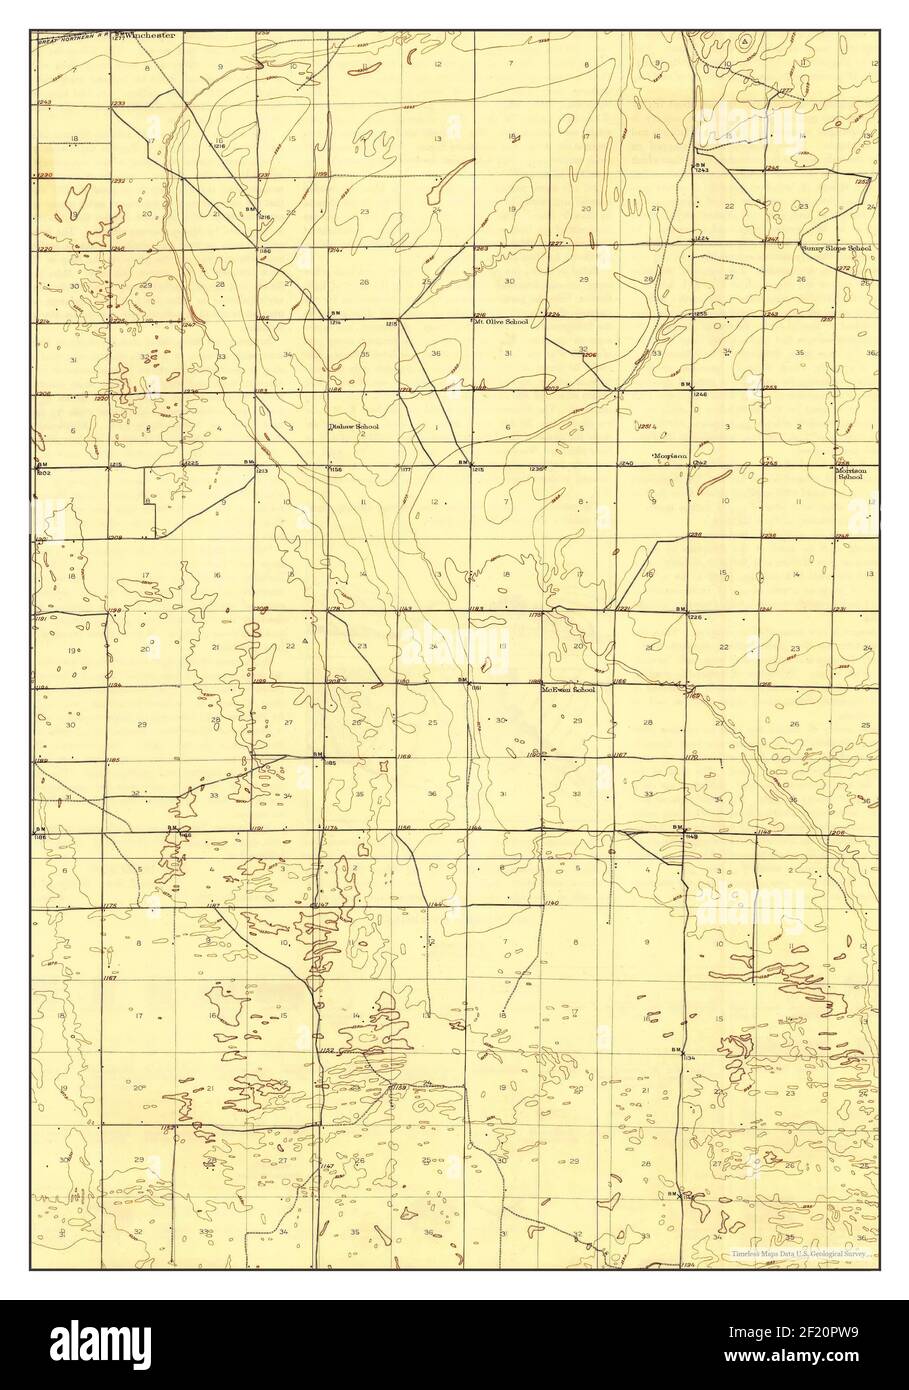 Winchester, Washington, map 1910, 1:62500, United States of America by Timeless Maps, data U.S. Geological Survey Stock Photo